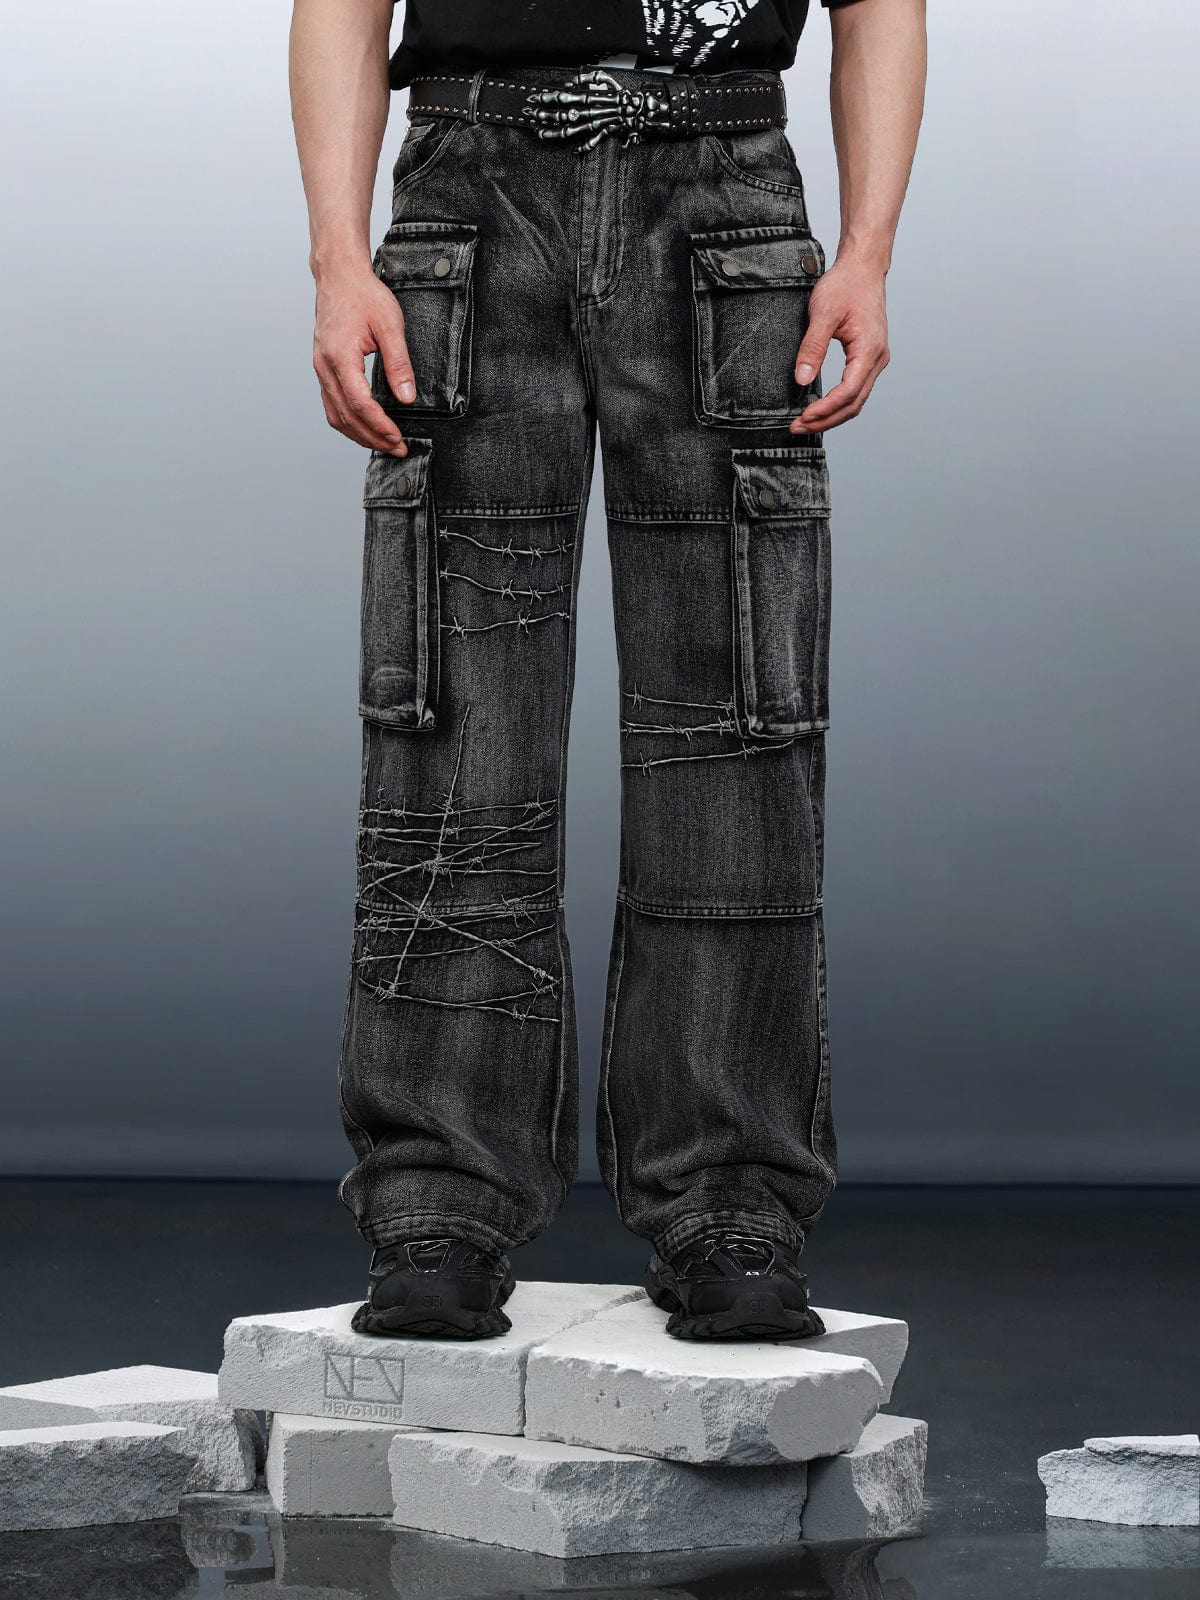 NEV Multi-Pocket Embroidered Washed Jeans